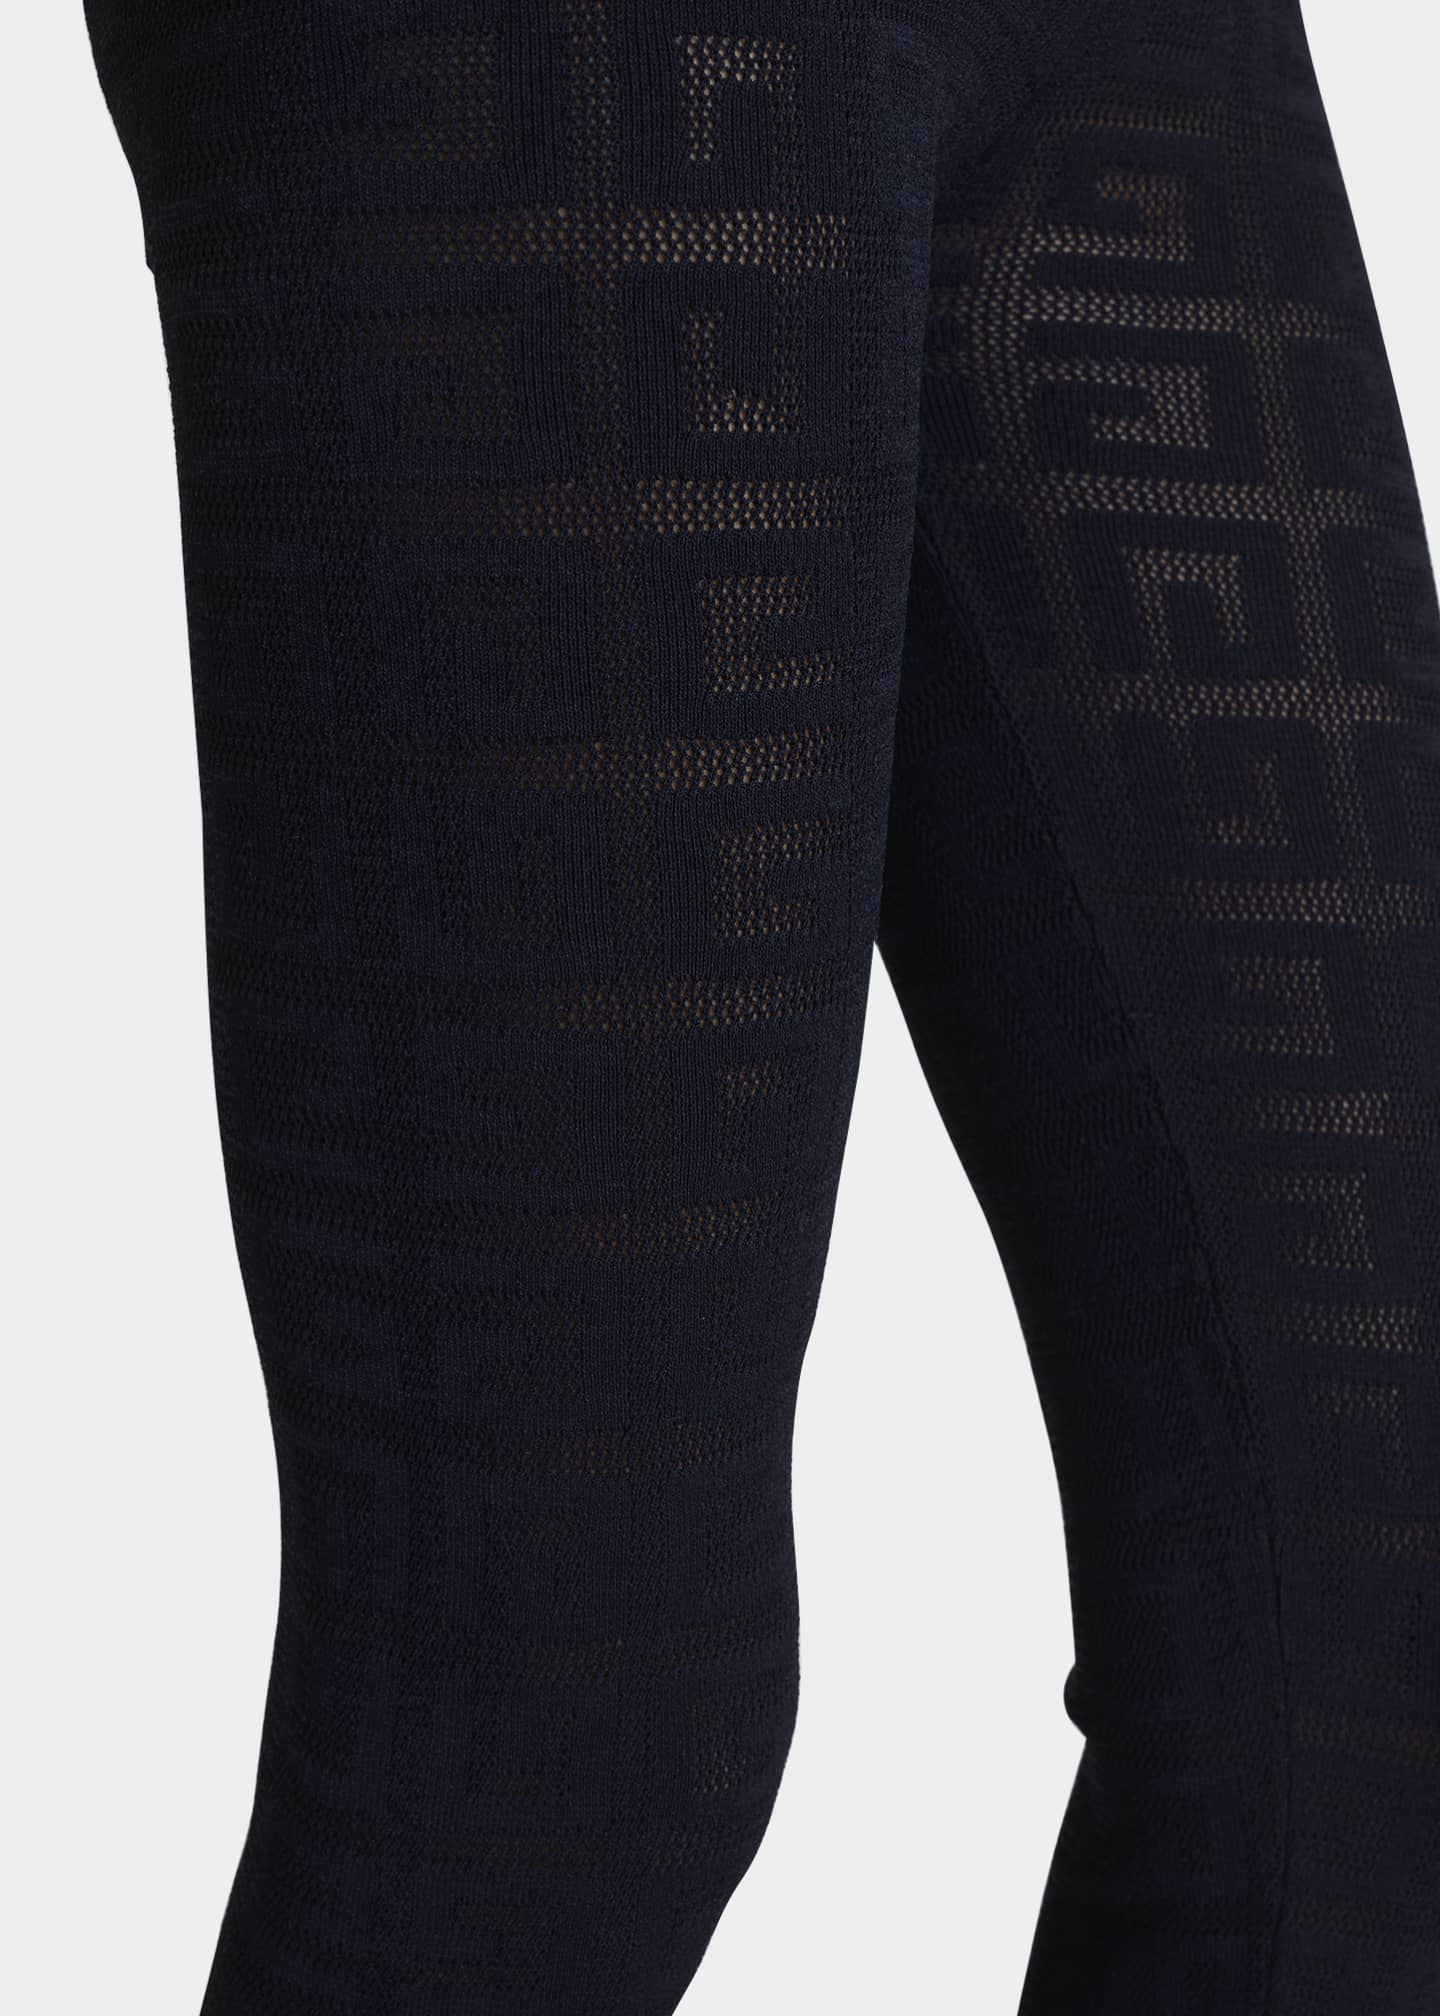 Givenchy Monogram Leggings  Clothes design, Leggings, Givenchy